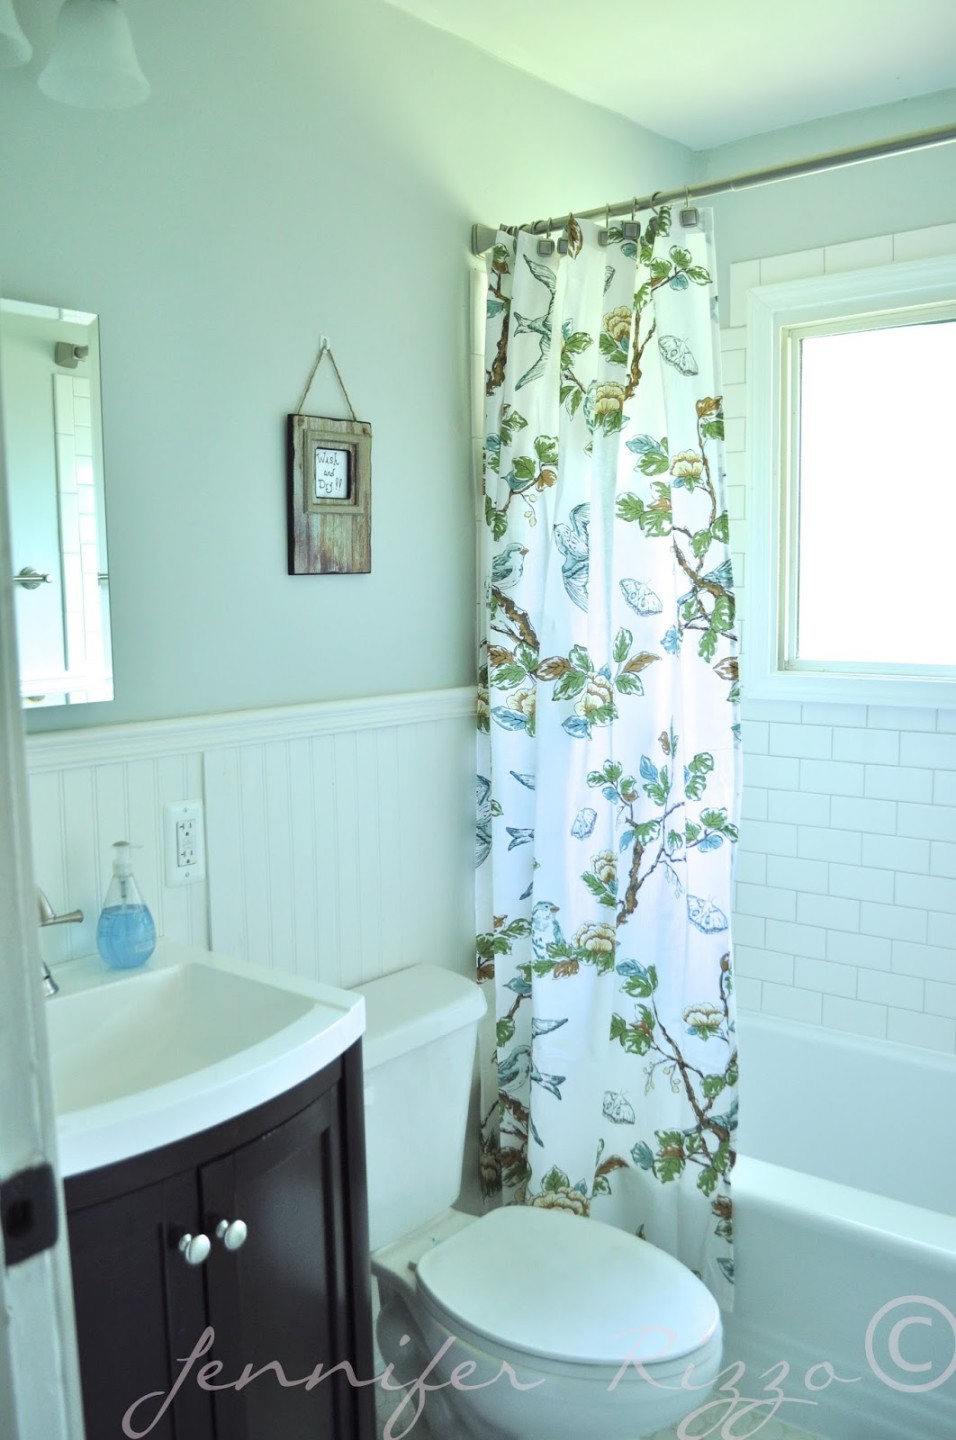 bathroom-wonderful-blue-shade-vintage-bathroom-tile-patterns-in-classic-kitchen-design-ideas-with-floral-pattern-bathtub-drapes-adorable-vintage-bathroom-tile-patterns-for-your-fabulous-bathroom - Copy